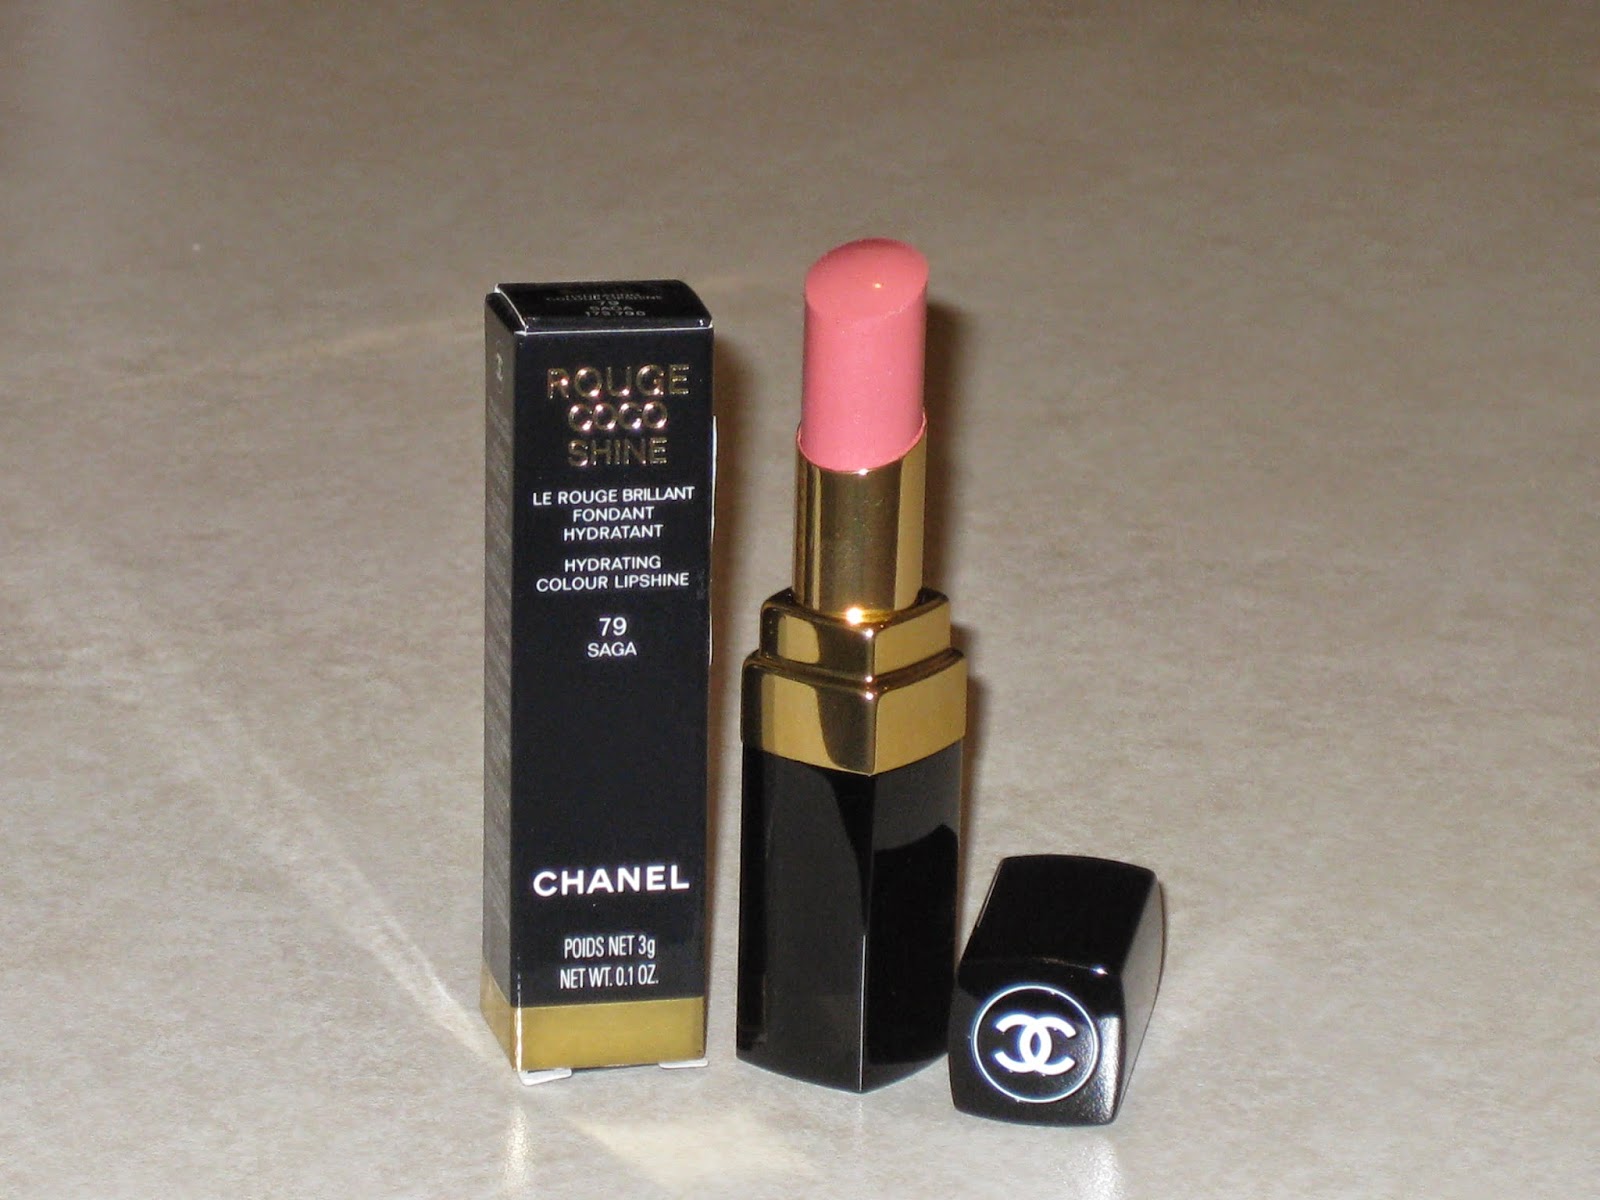 Chanel Rouge Coco Shine in "Saga 79" .